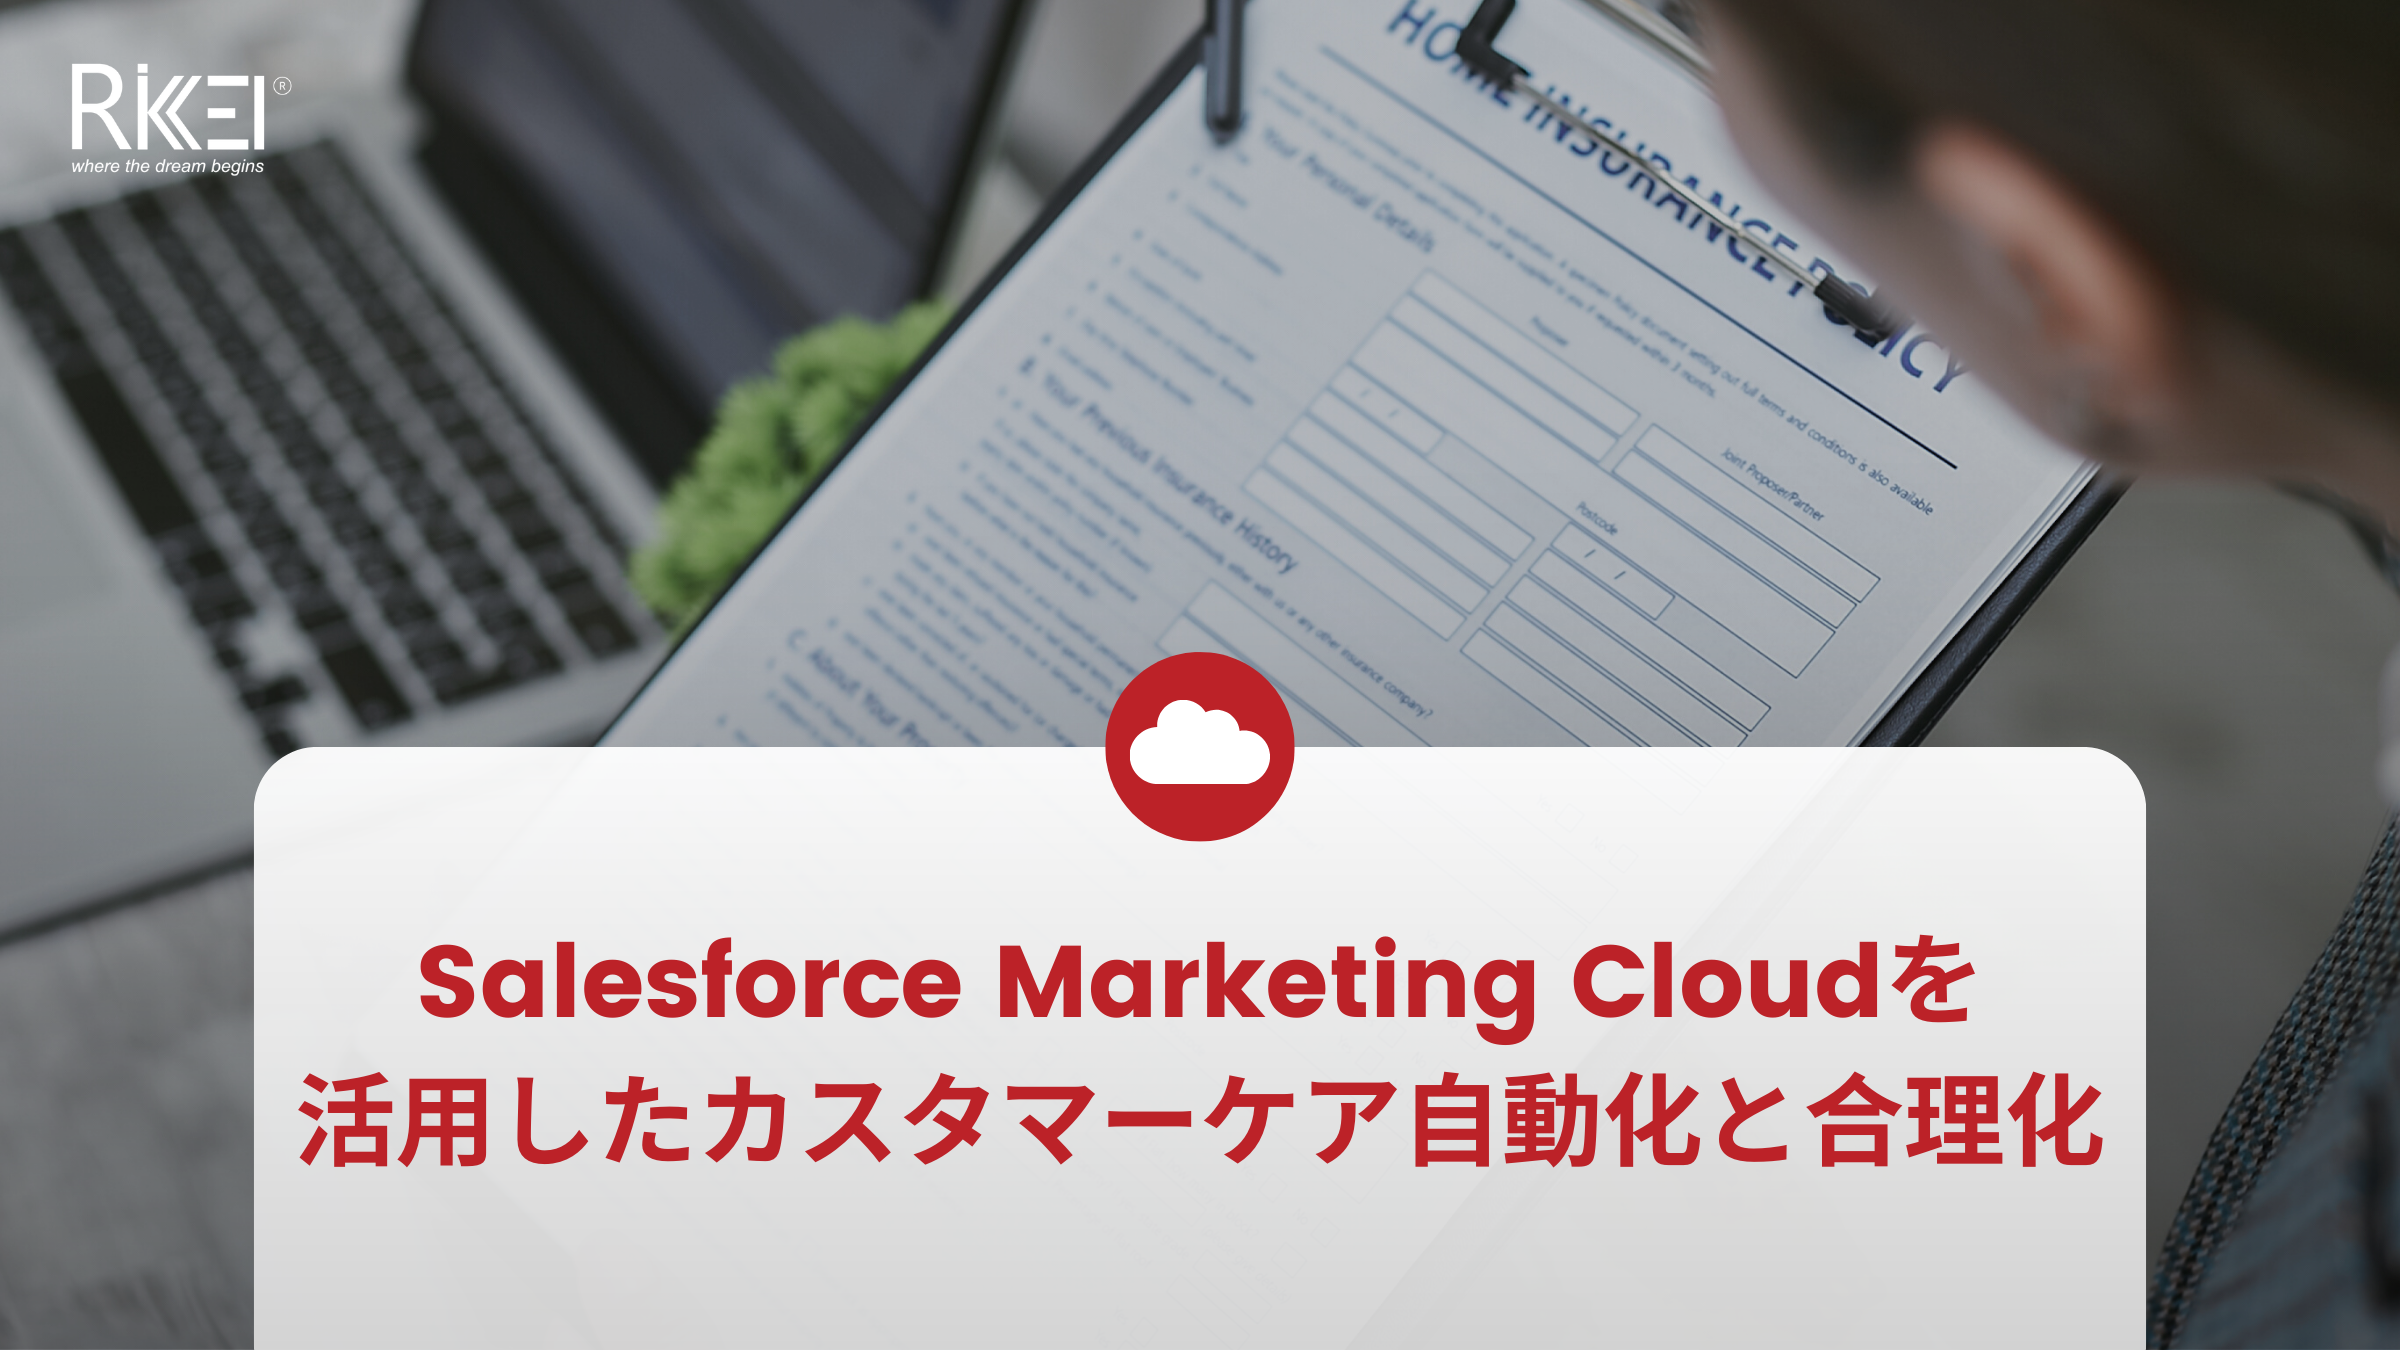 Salesforce Marketing Cloudを活用したカスタマーケア自動化と合理化